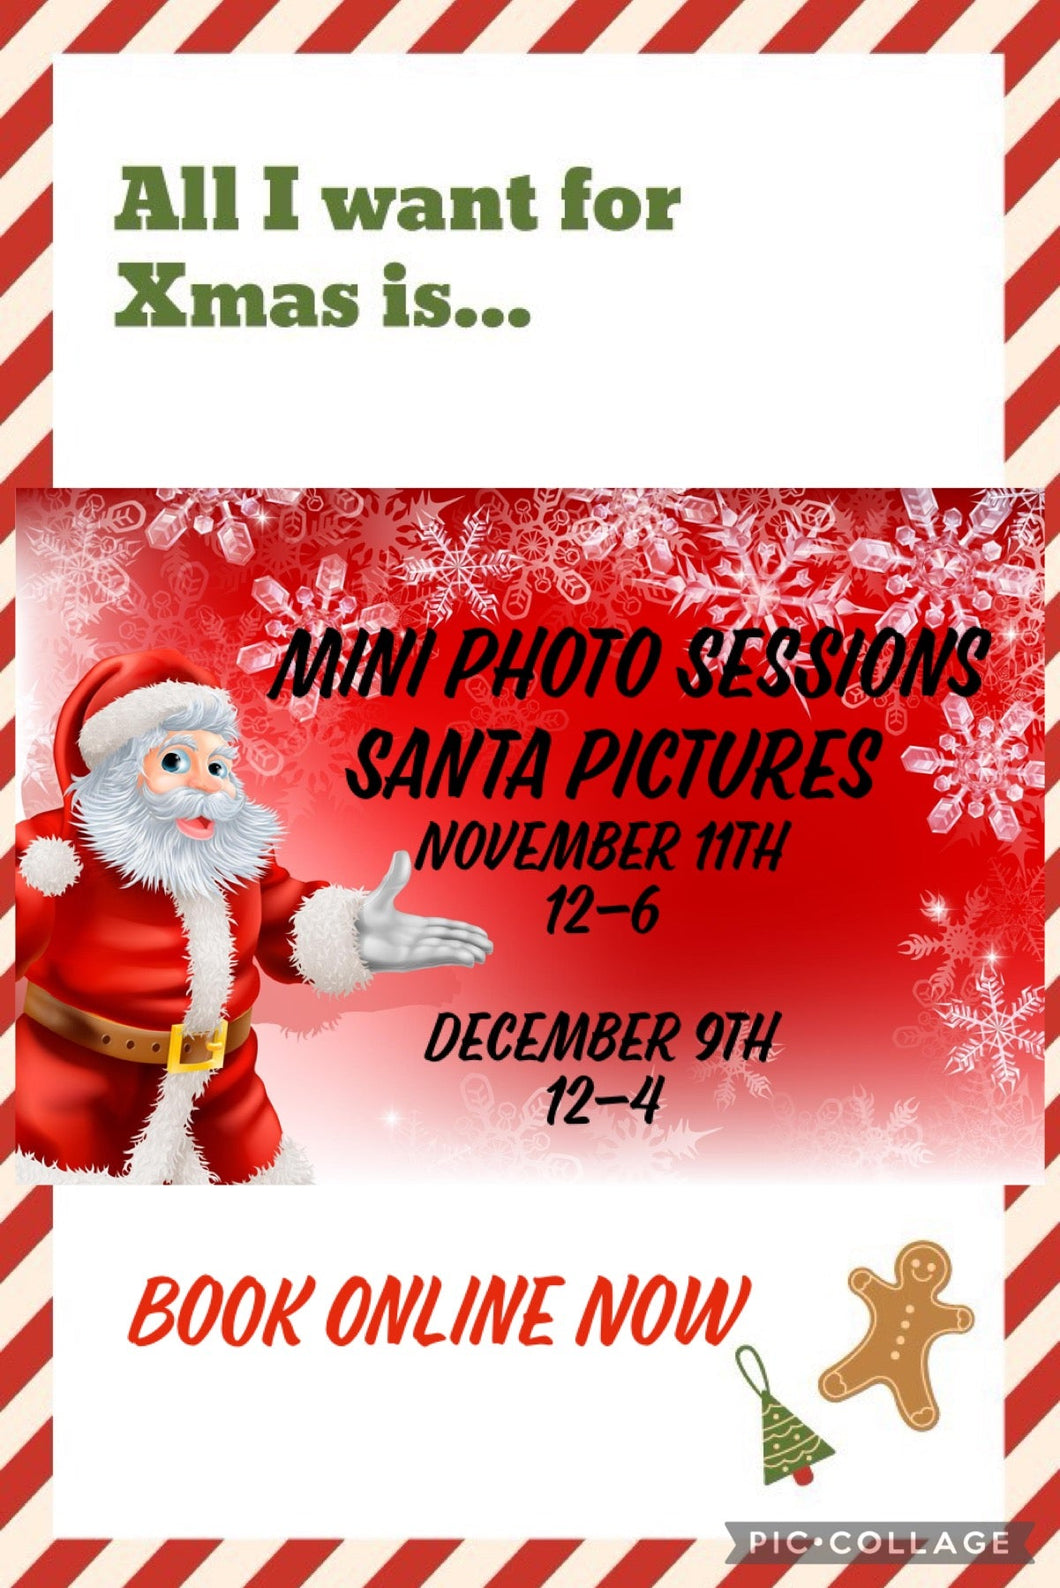 Santa Mini Photo Sessions Dec 9th